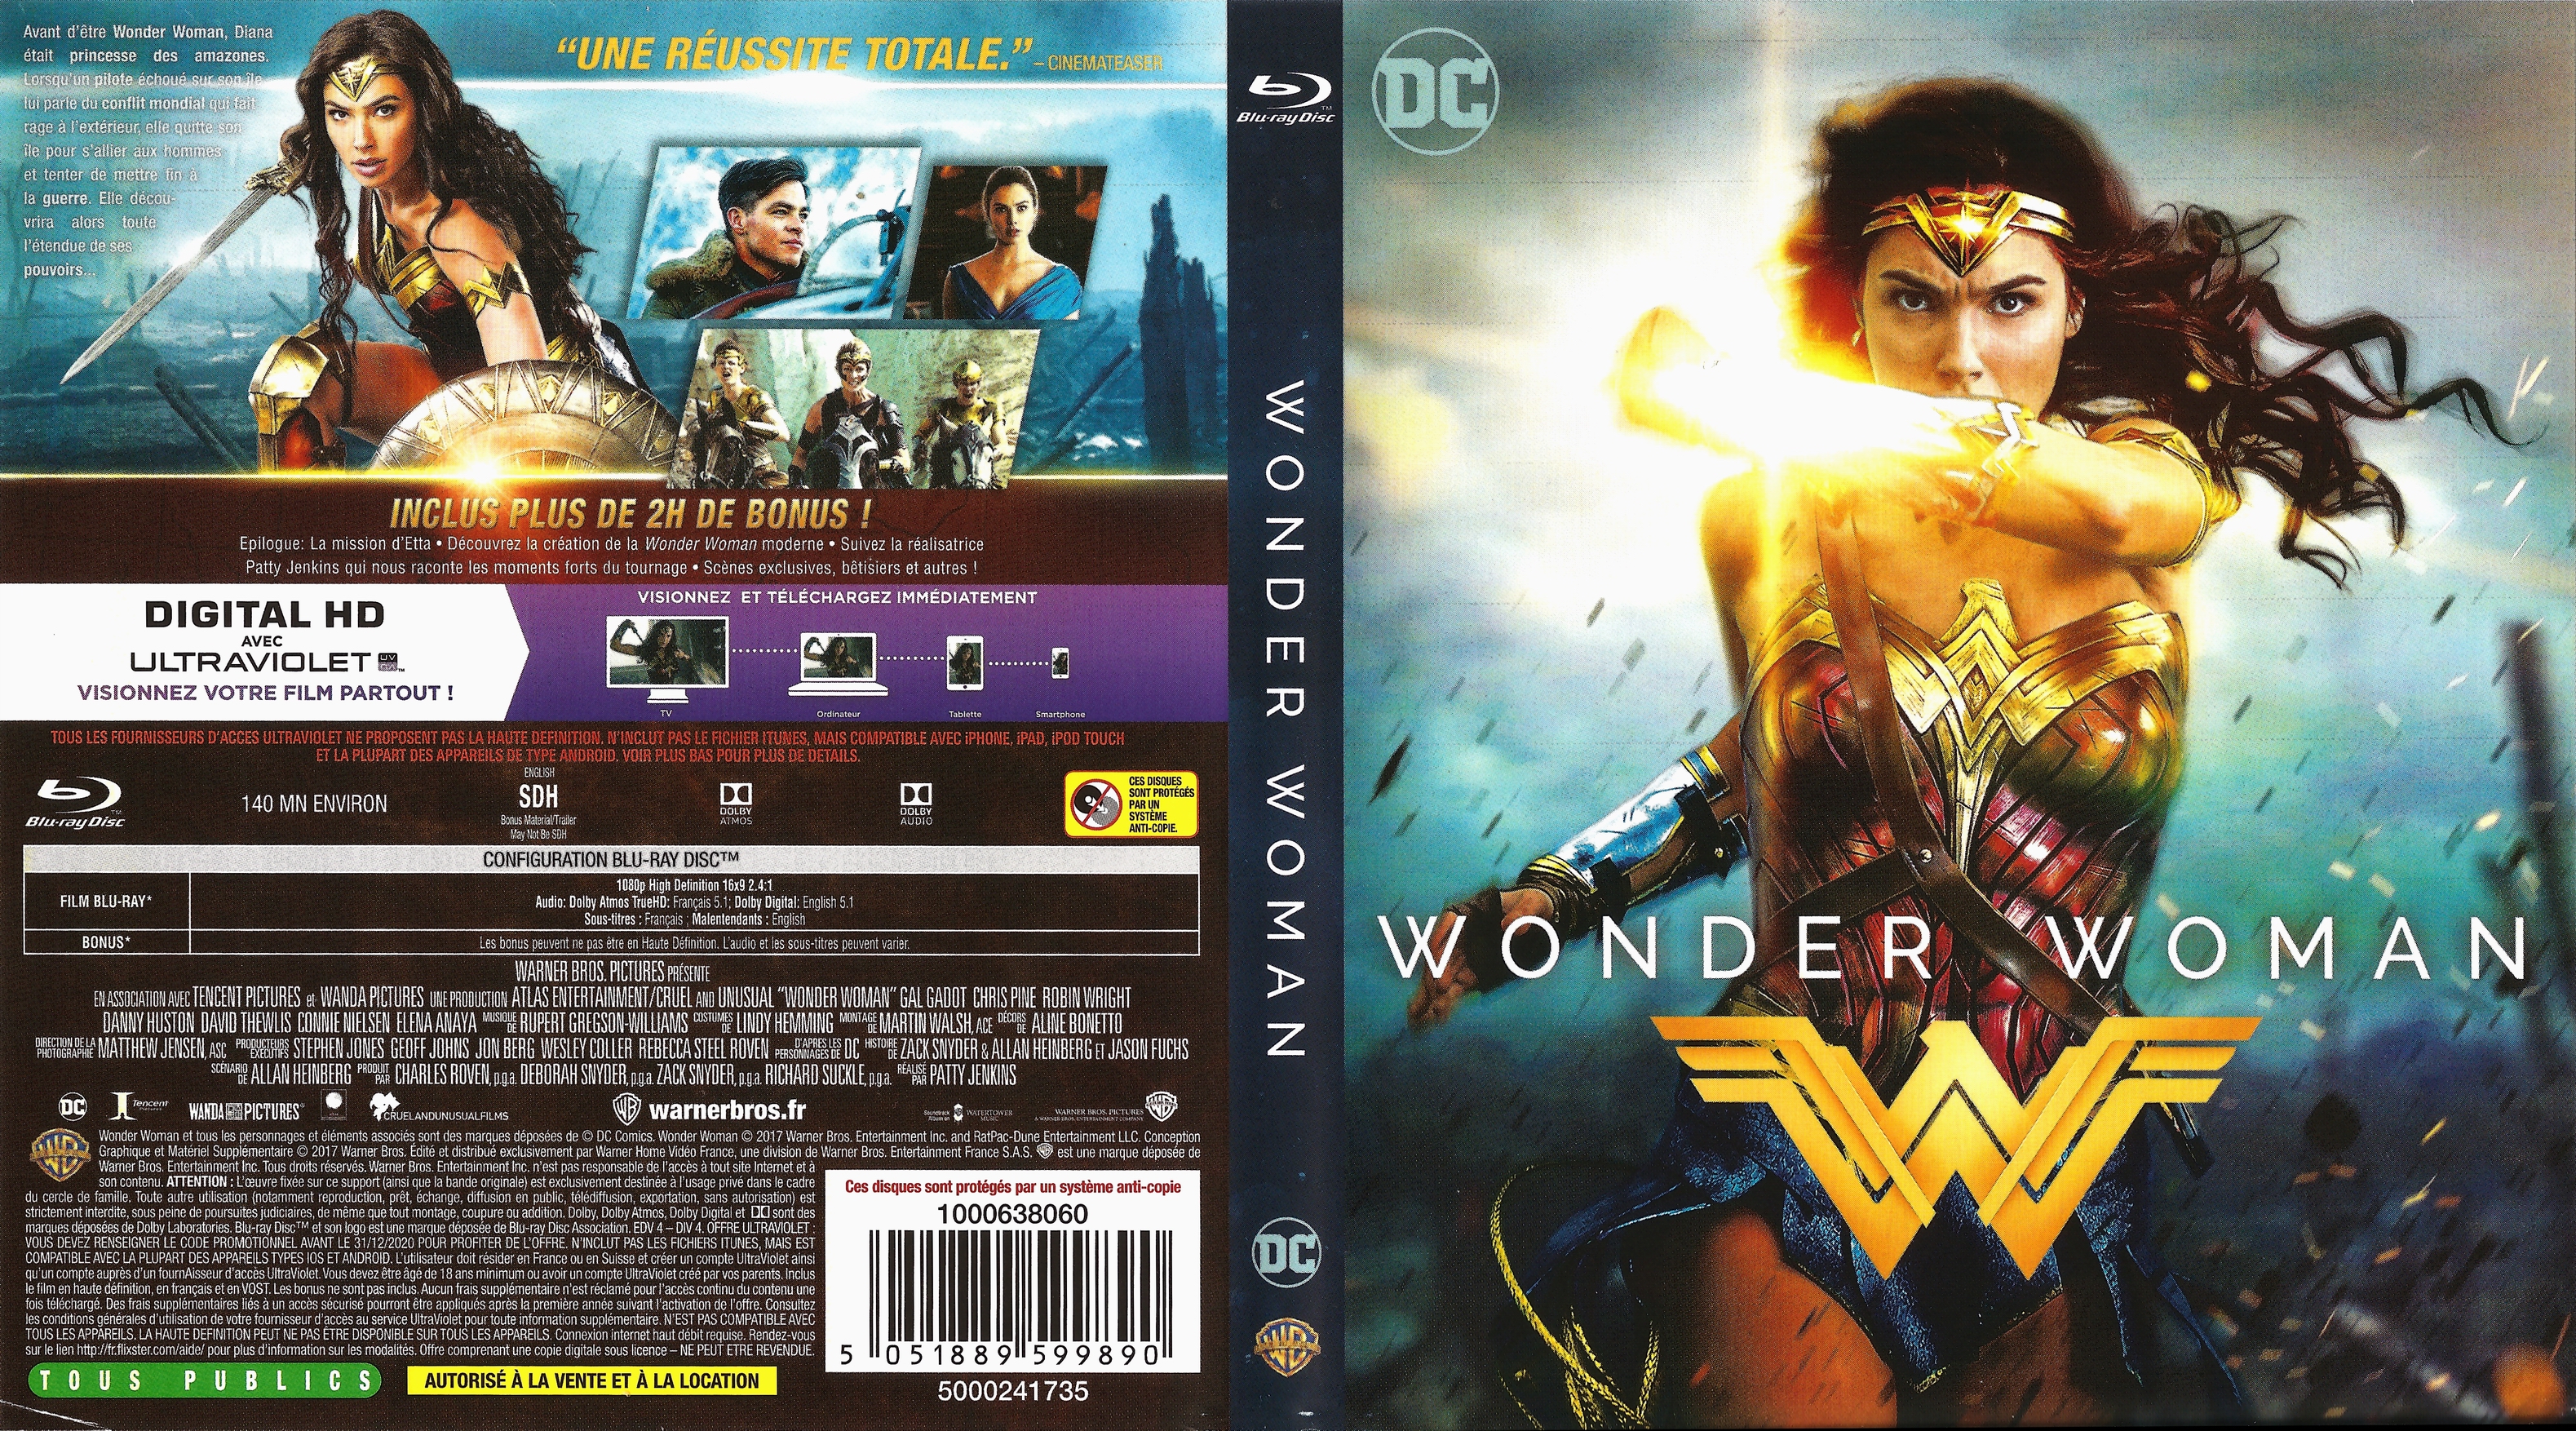 Jaquette DVD Wonder woman (BLU-RAY)